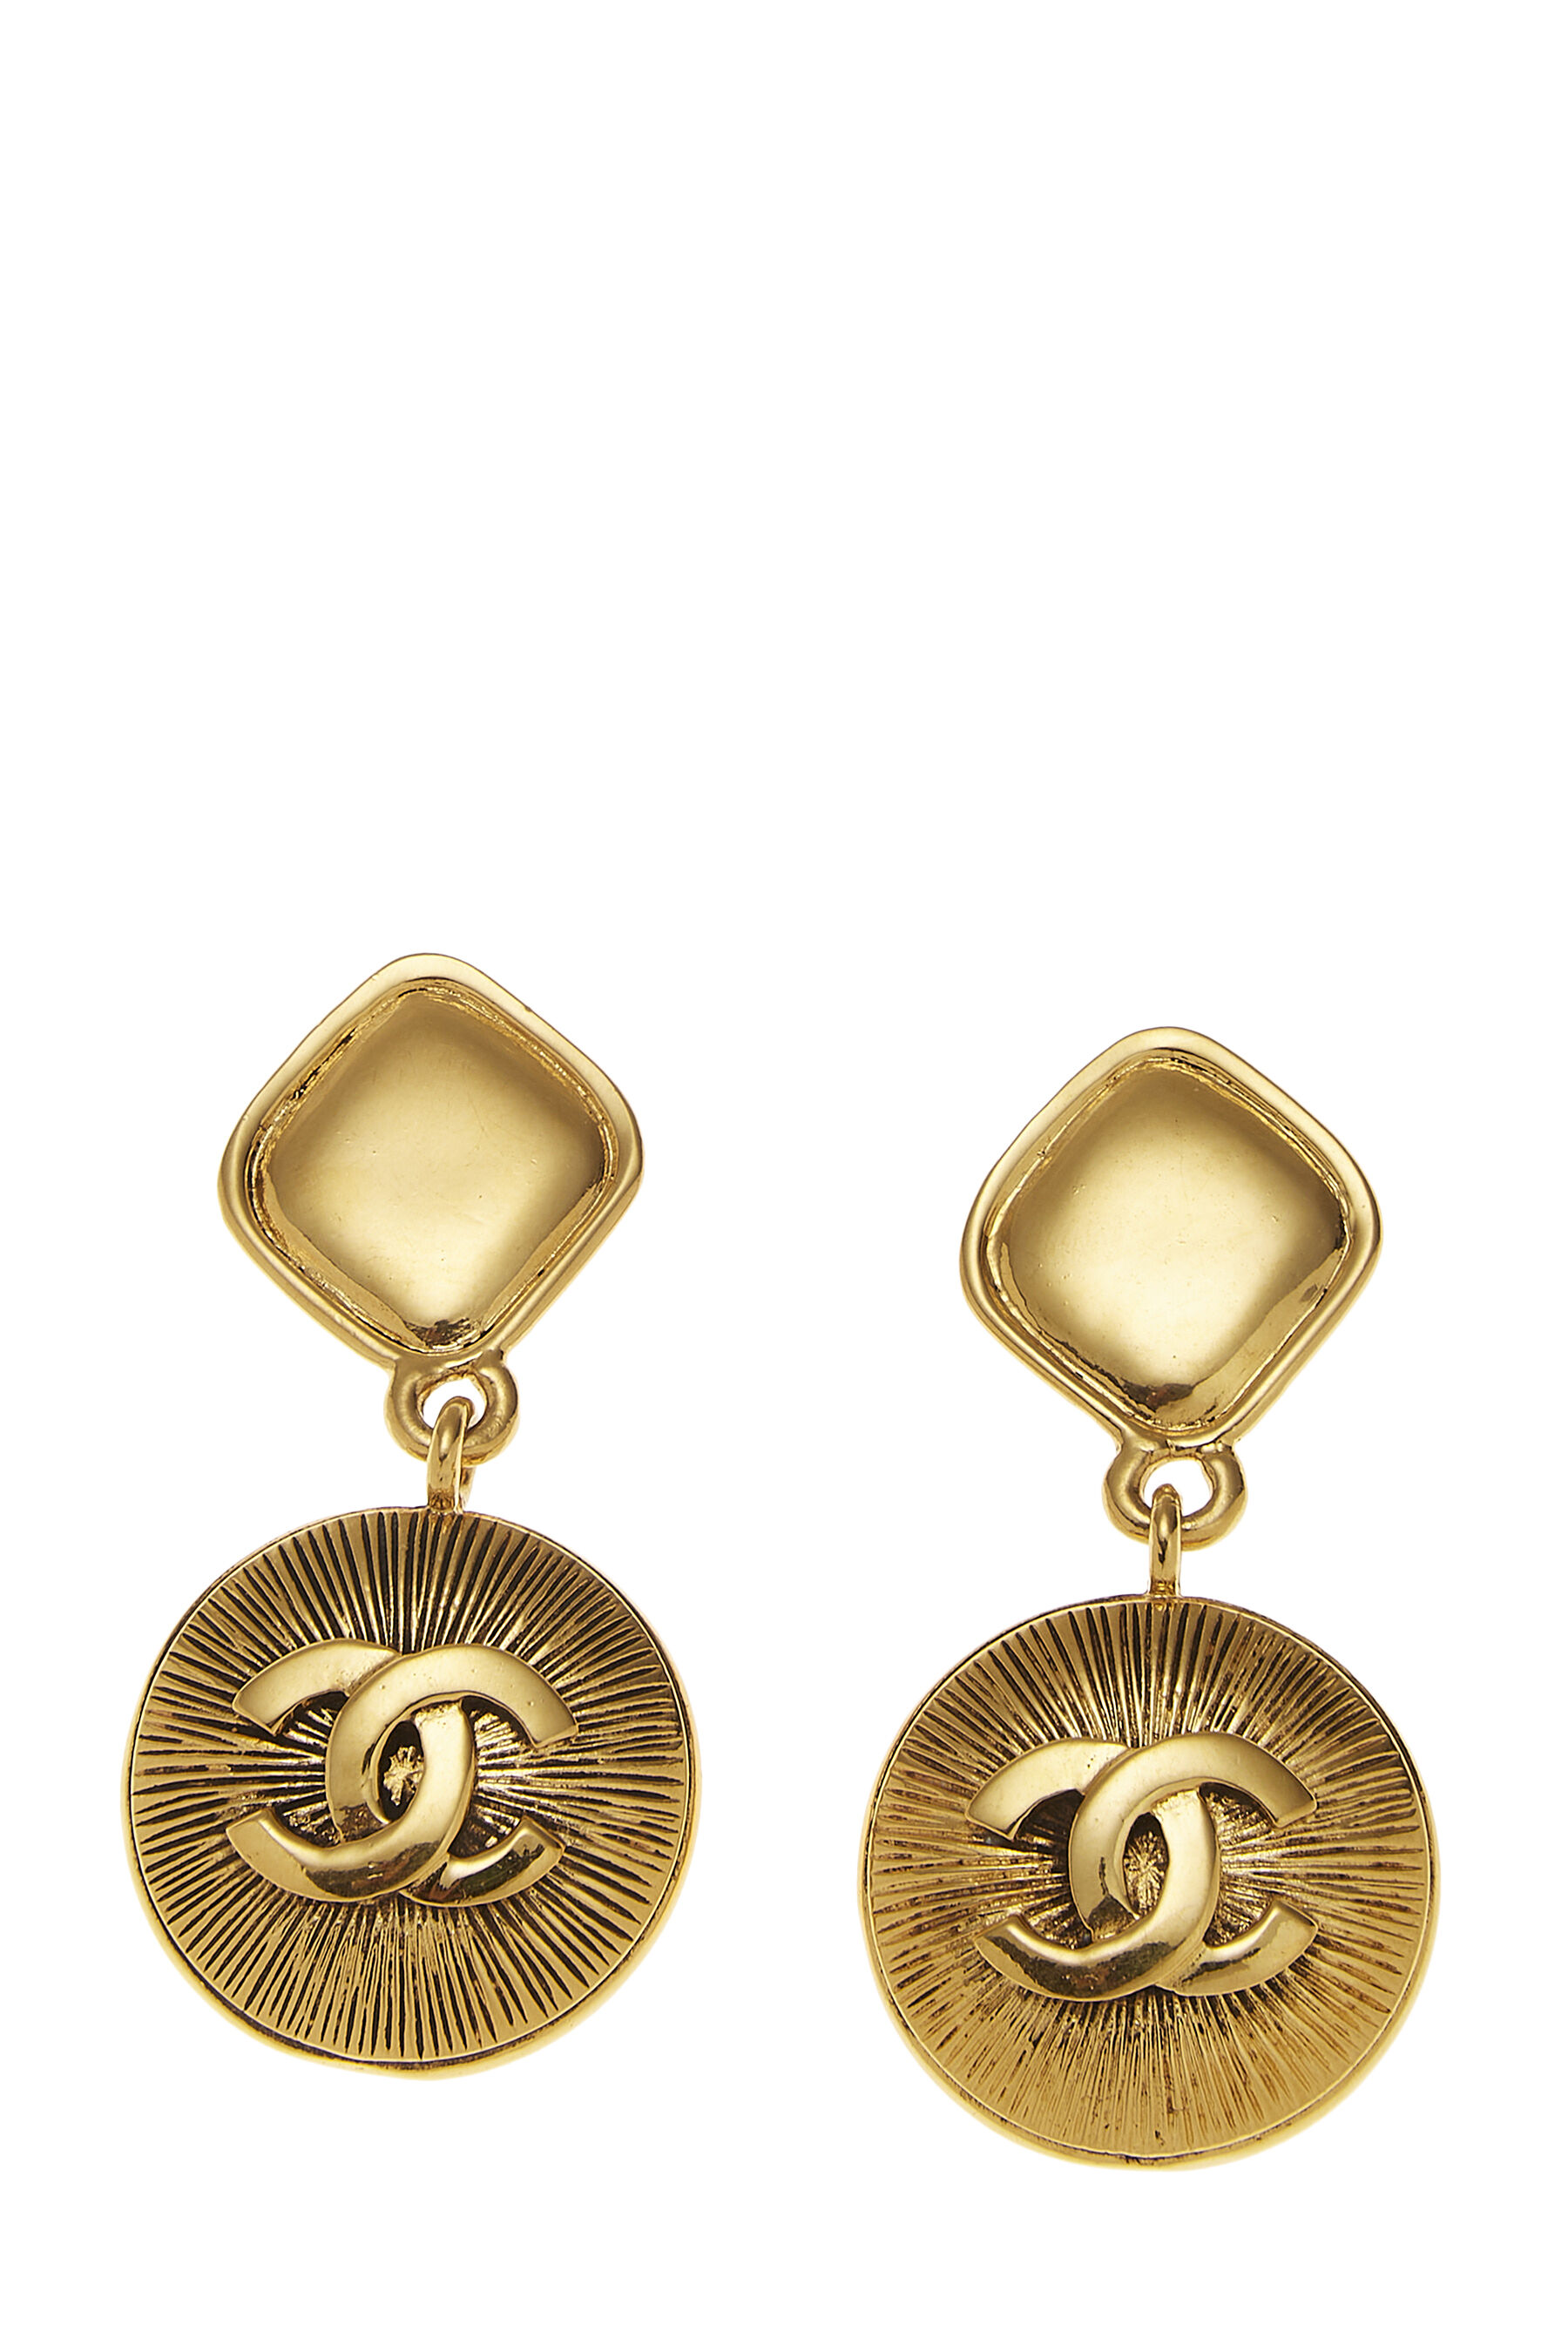 Gold 'CC' Dangling Sunburst Earrings